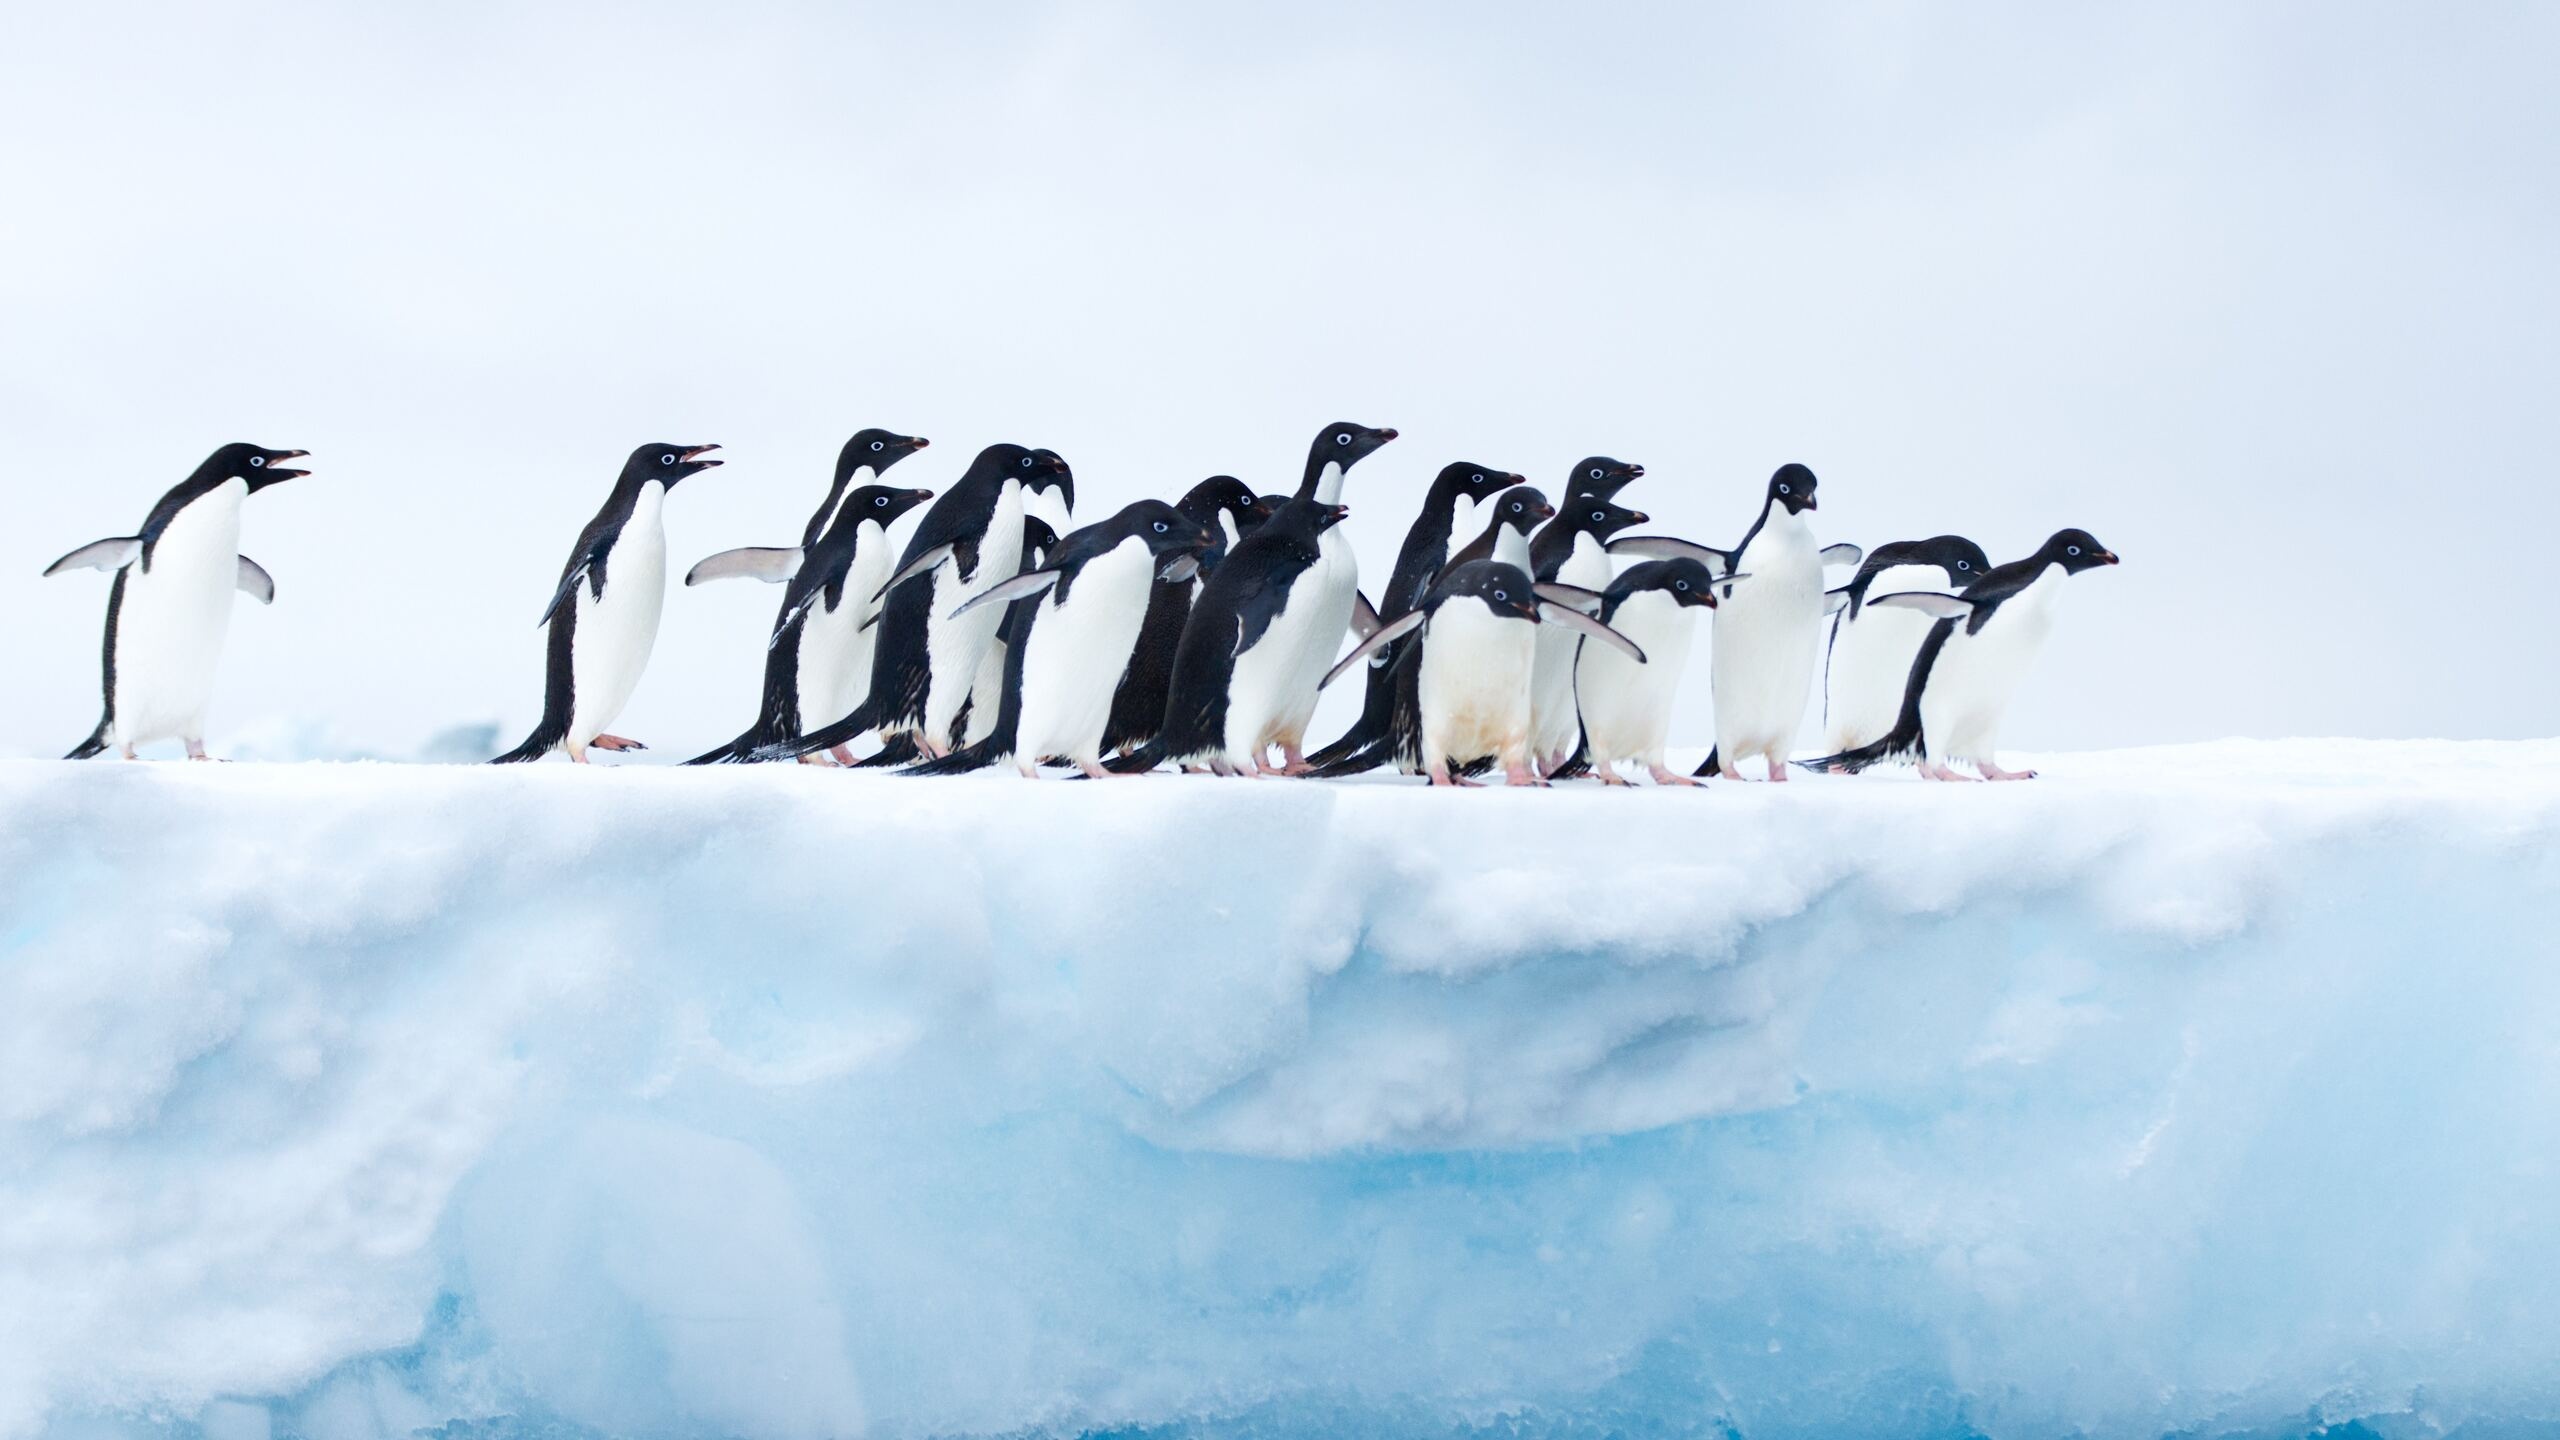 Penguins in Antarctica, Breathtaking 1440p, Arctic wonders, HD and 4K images, 2560x1440 HD Desktop